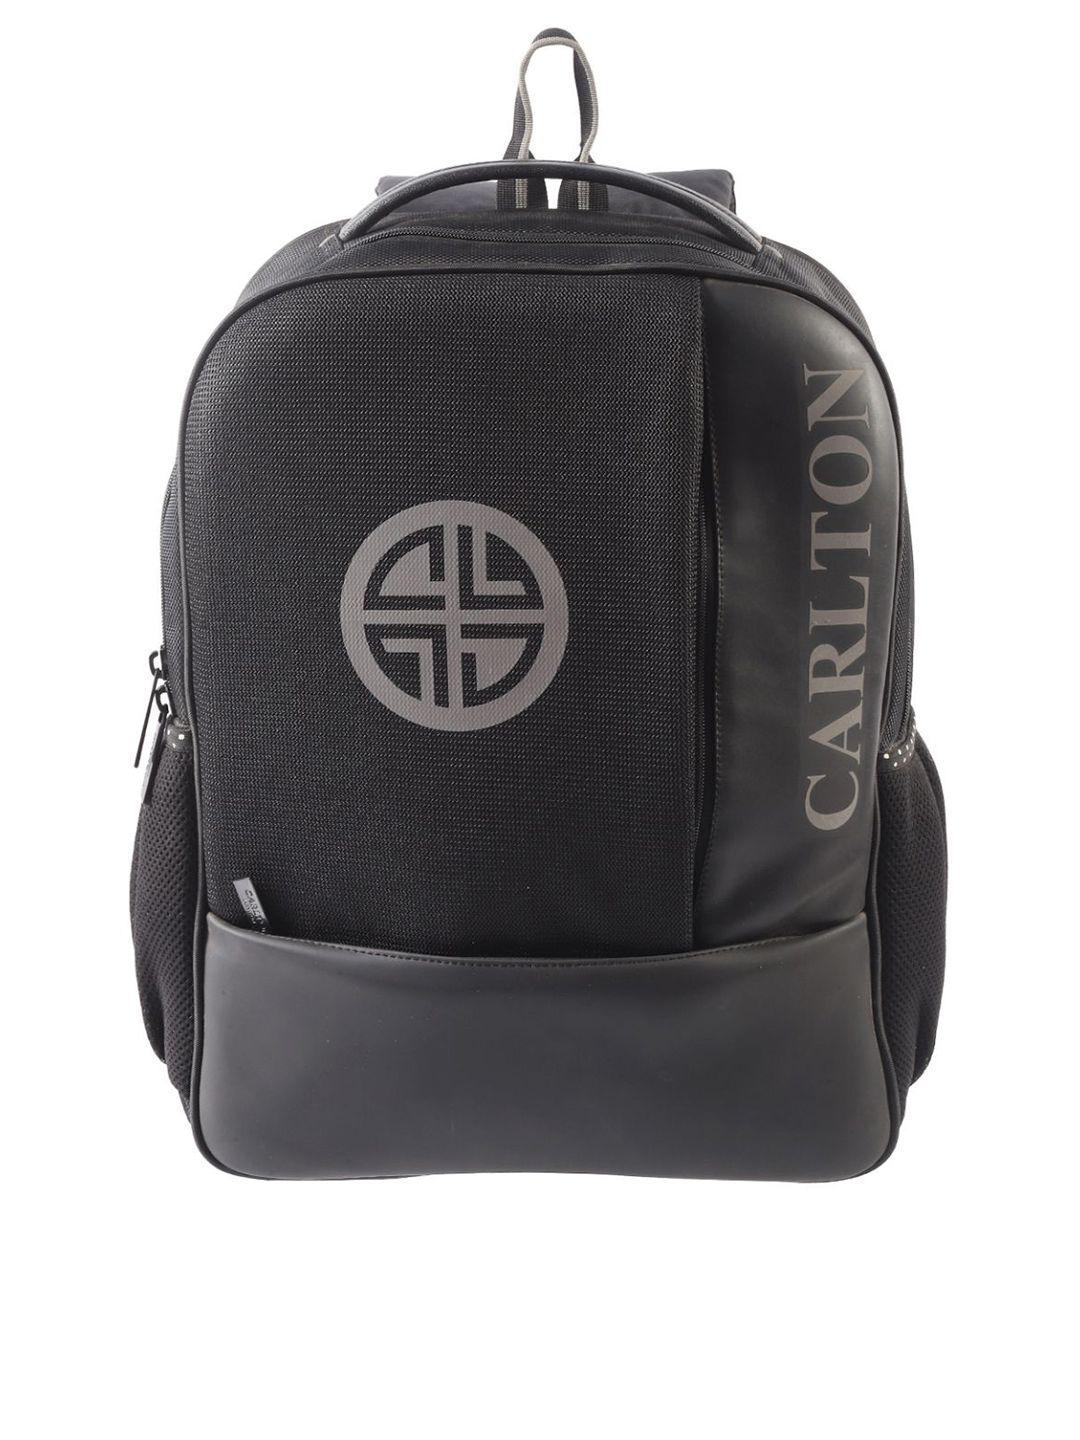 carlton-london-brand-logo-printed-ergonomic-water-resistant-backpack